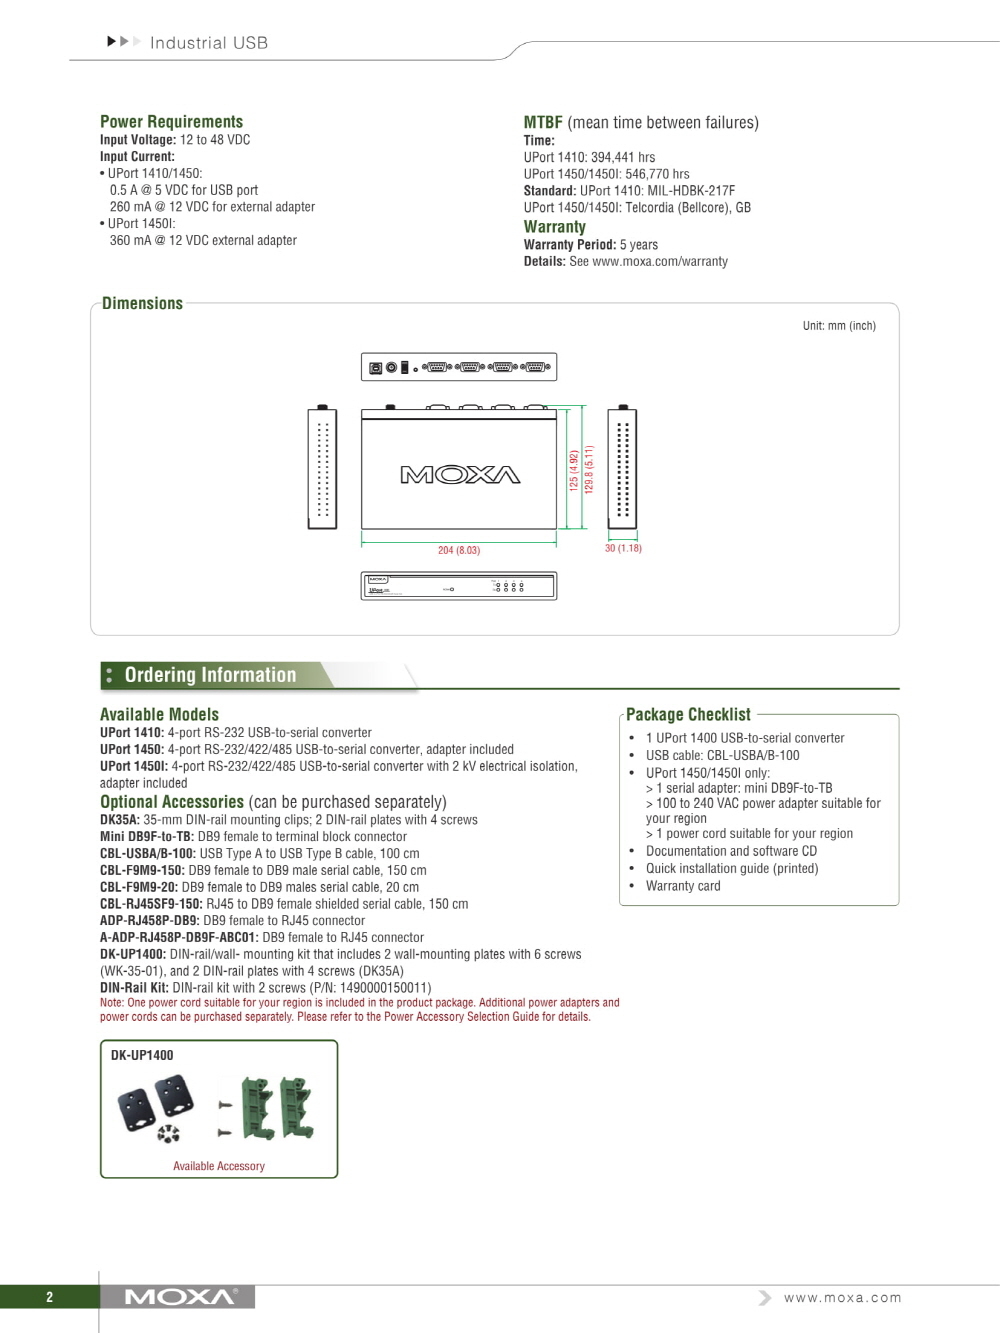 MOXA] UPORT 1450 USB to 4ポート Serial ハブ -情報通信の専門家-EXATEK